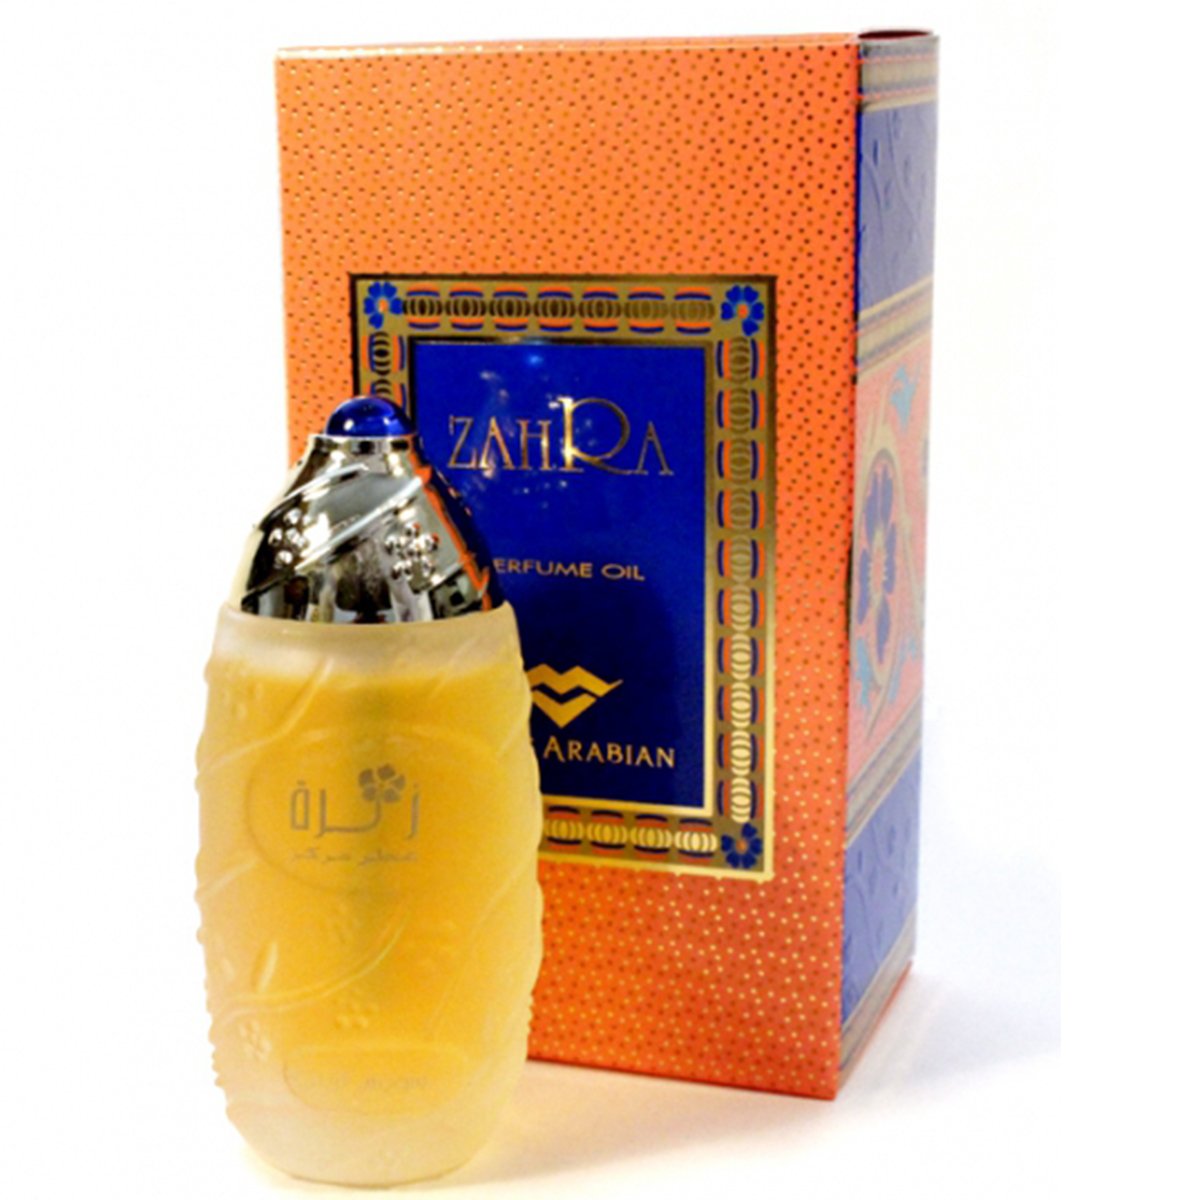 Zahra Parfum Oil 30ml Swiss Arabian - Smile Europe Wholesale 